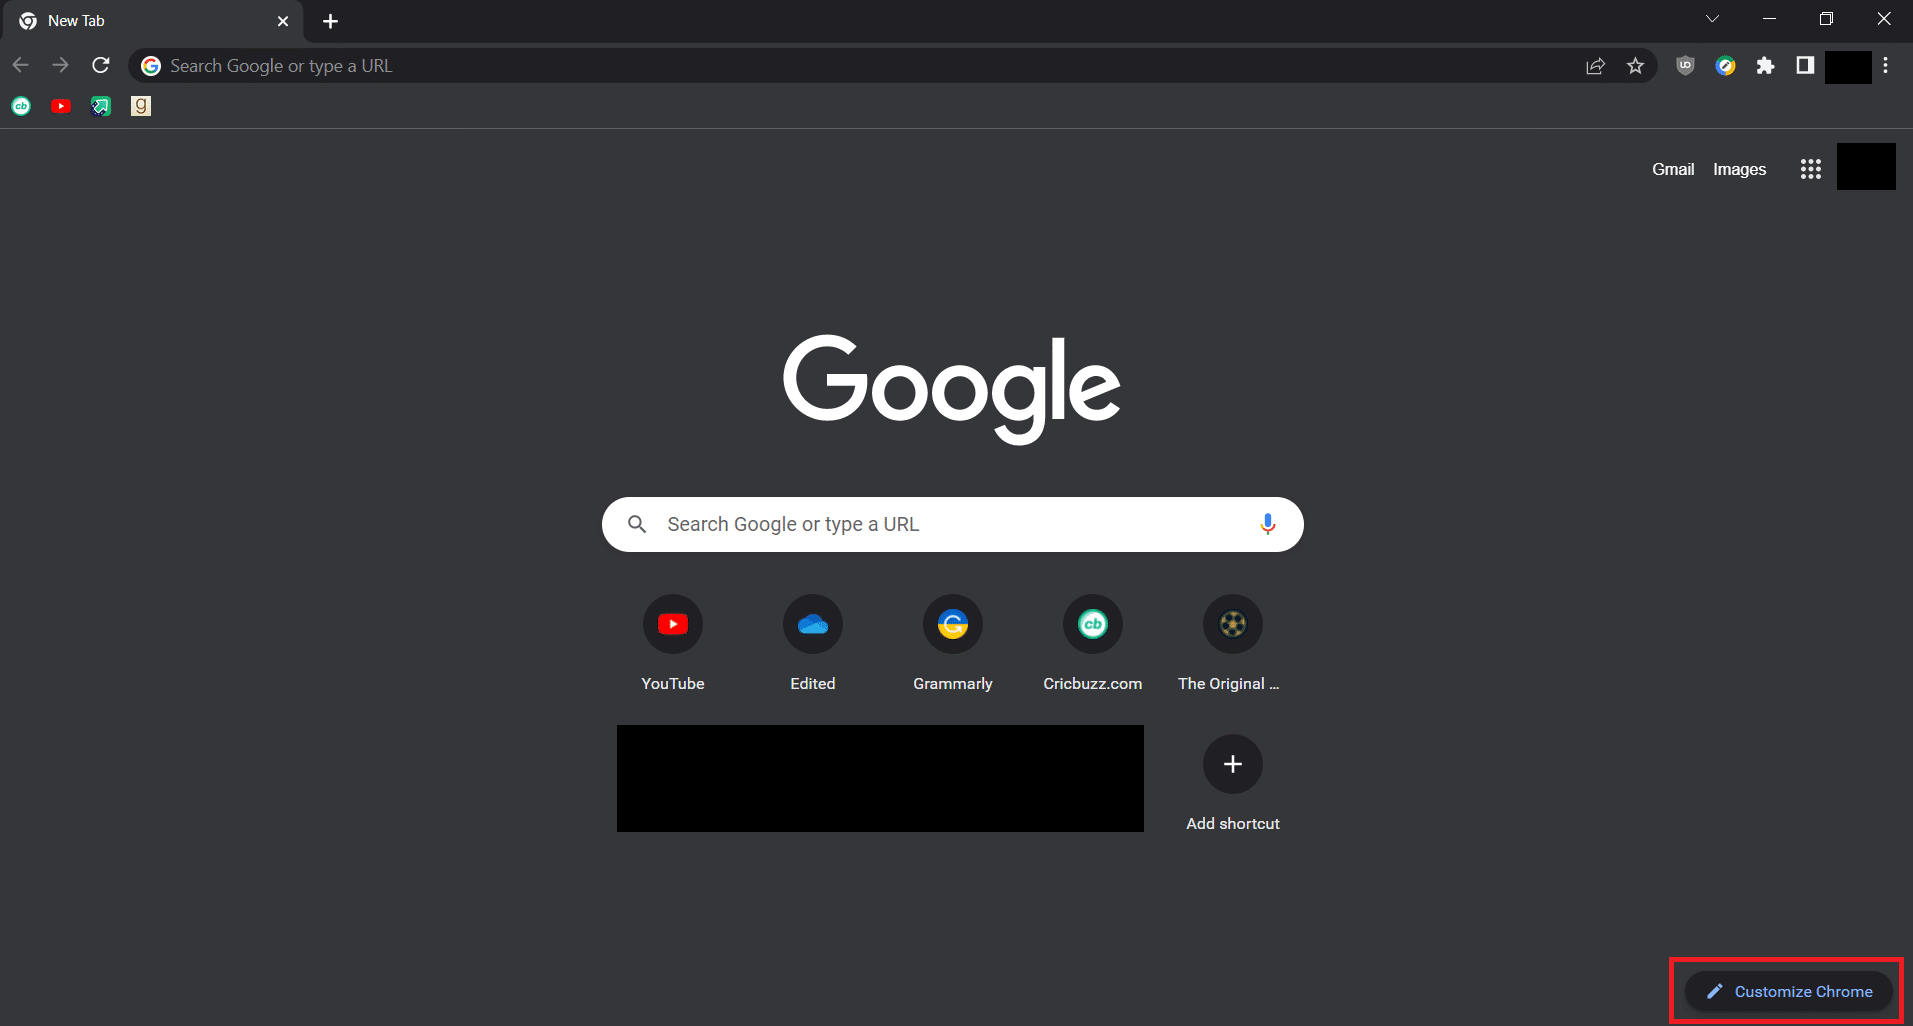 Customize Chrome option 